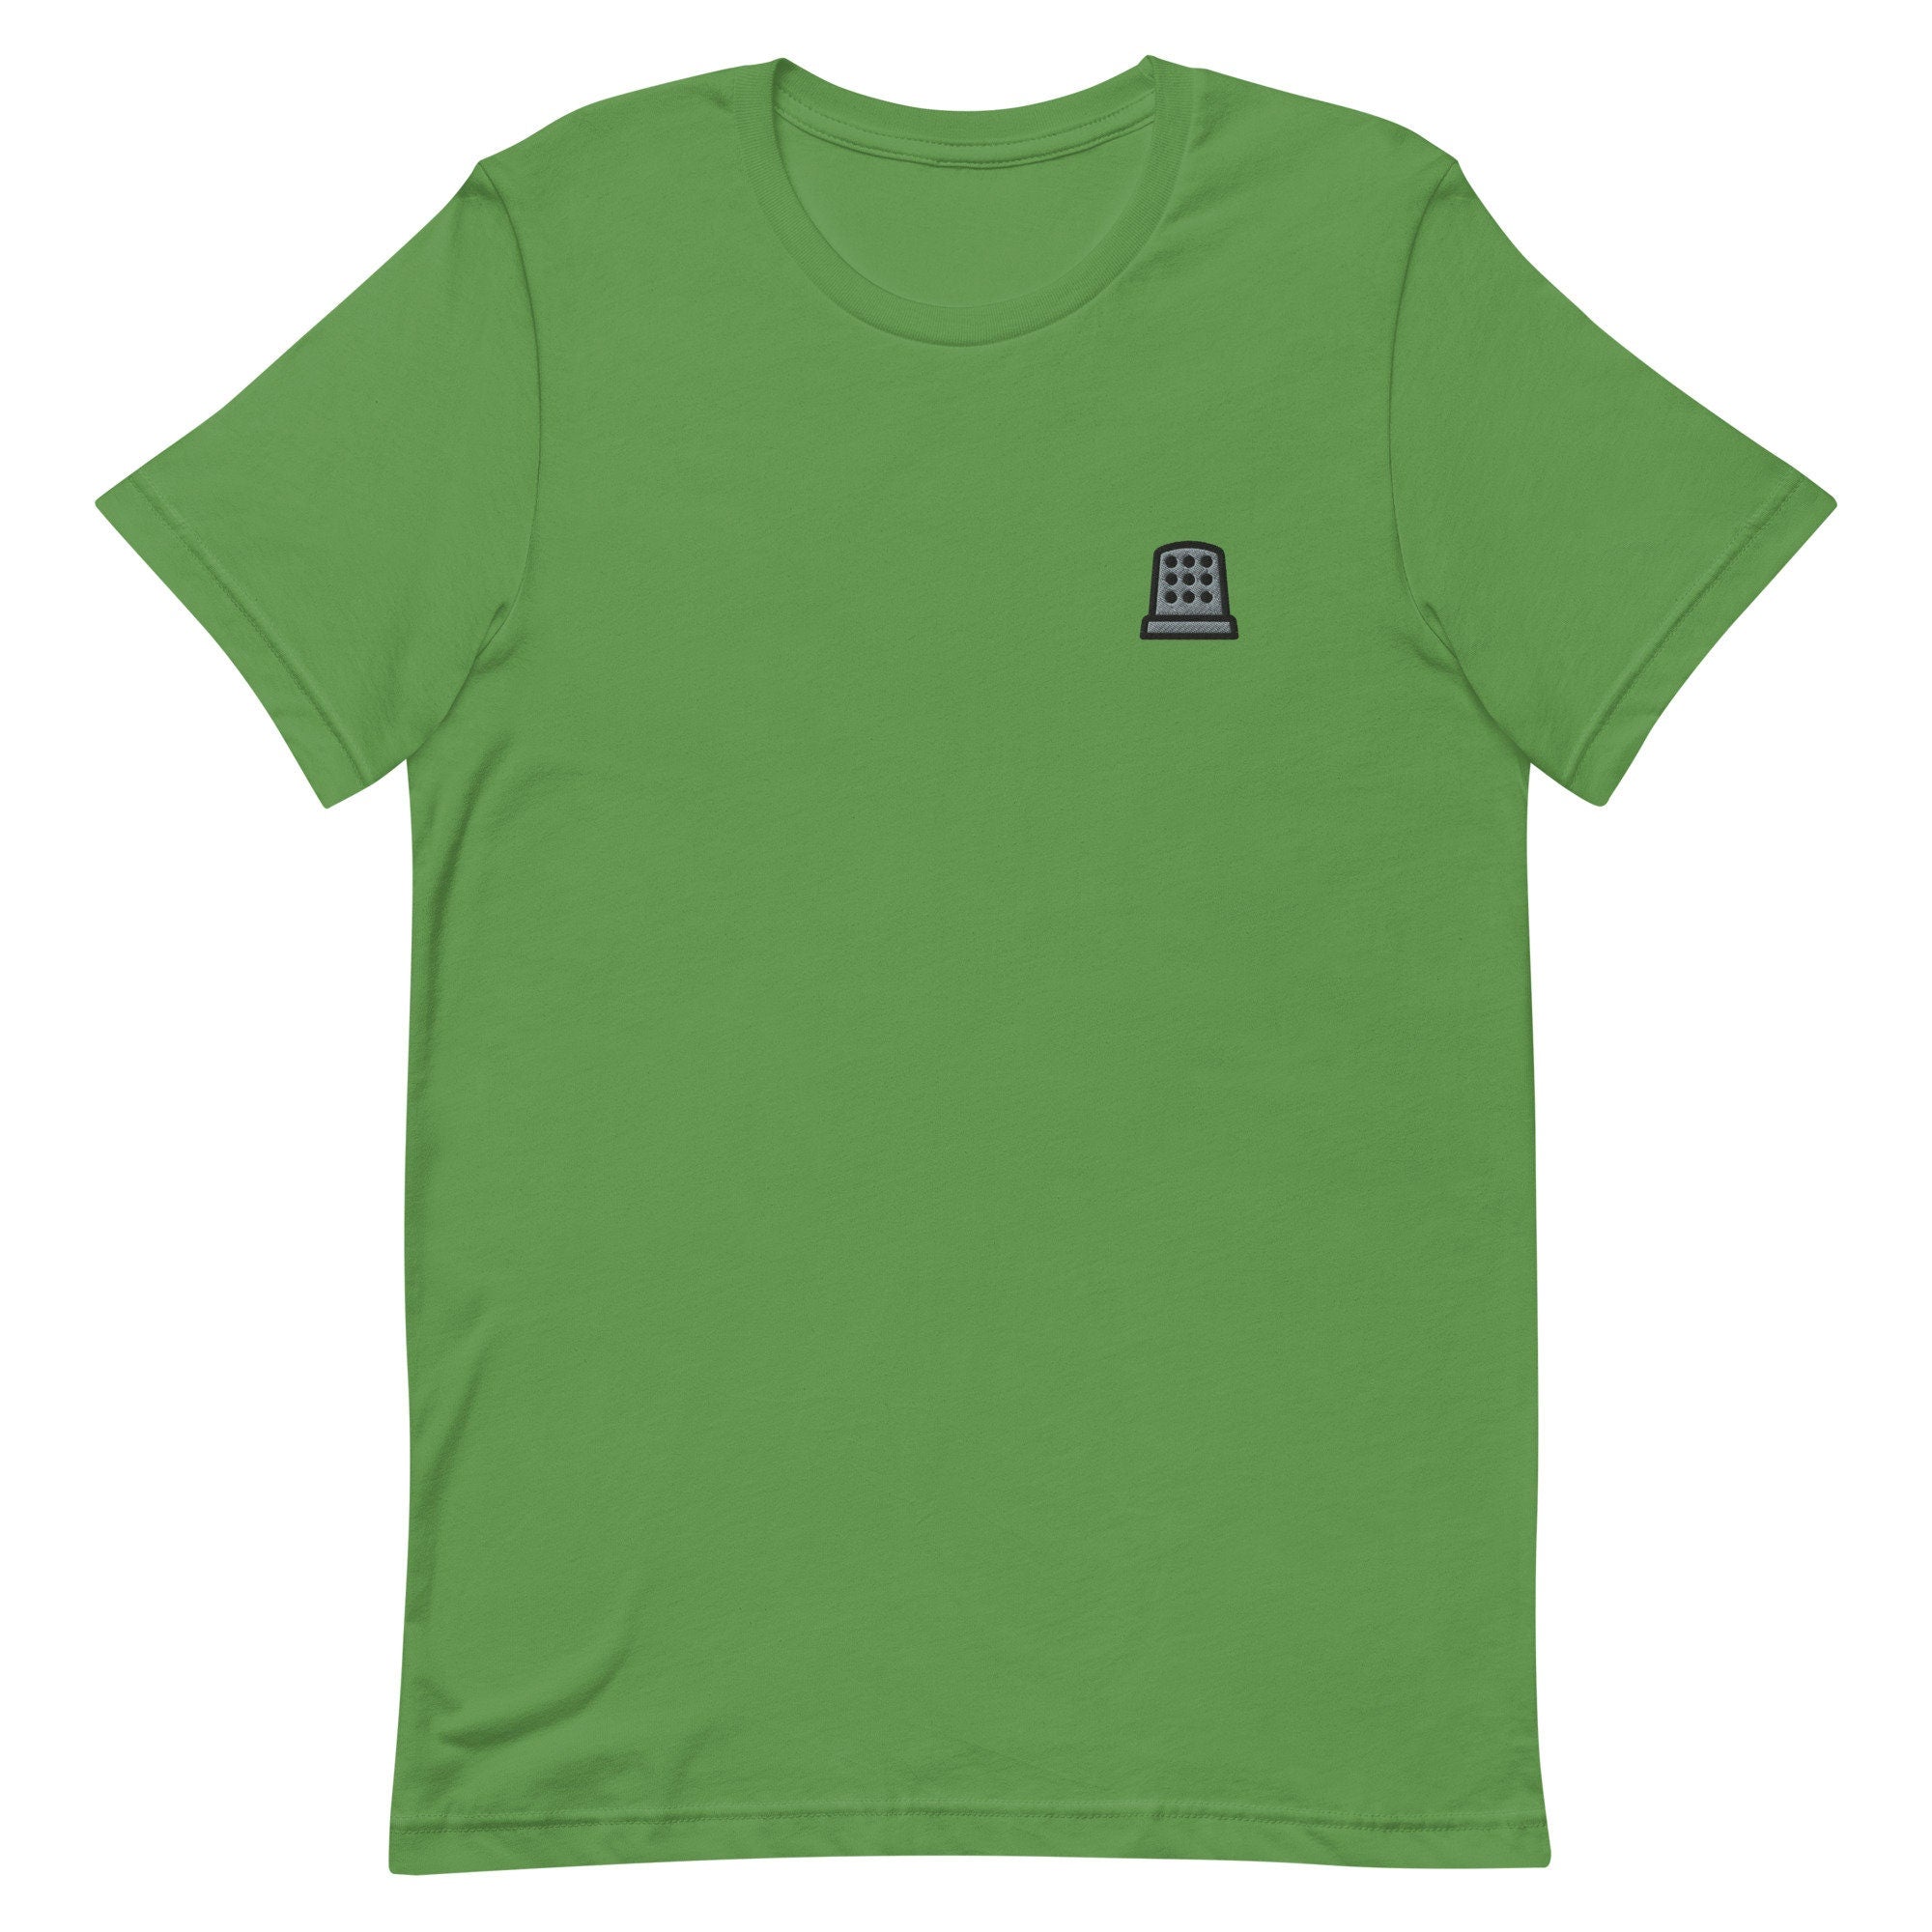 Thimble Premium Men's T-Shirt, Embroidered Men's T-Shirt Gift for Boyfriend, Men's Short Sleeve Shirt - Multiple Colors